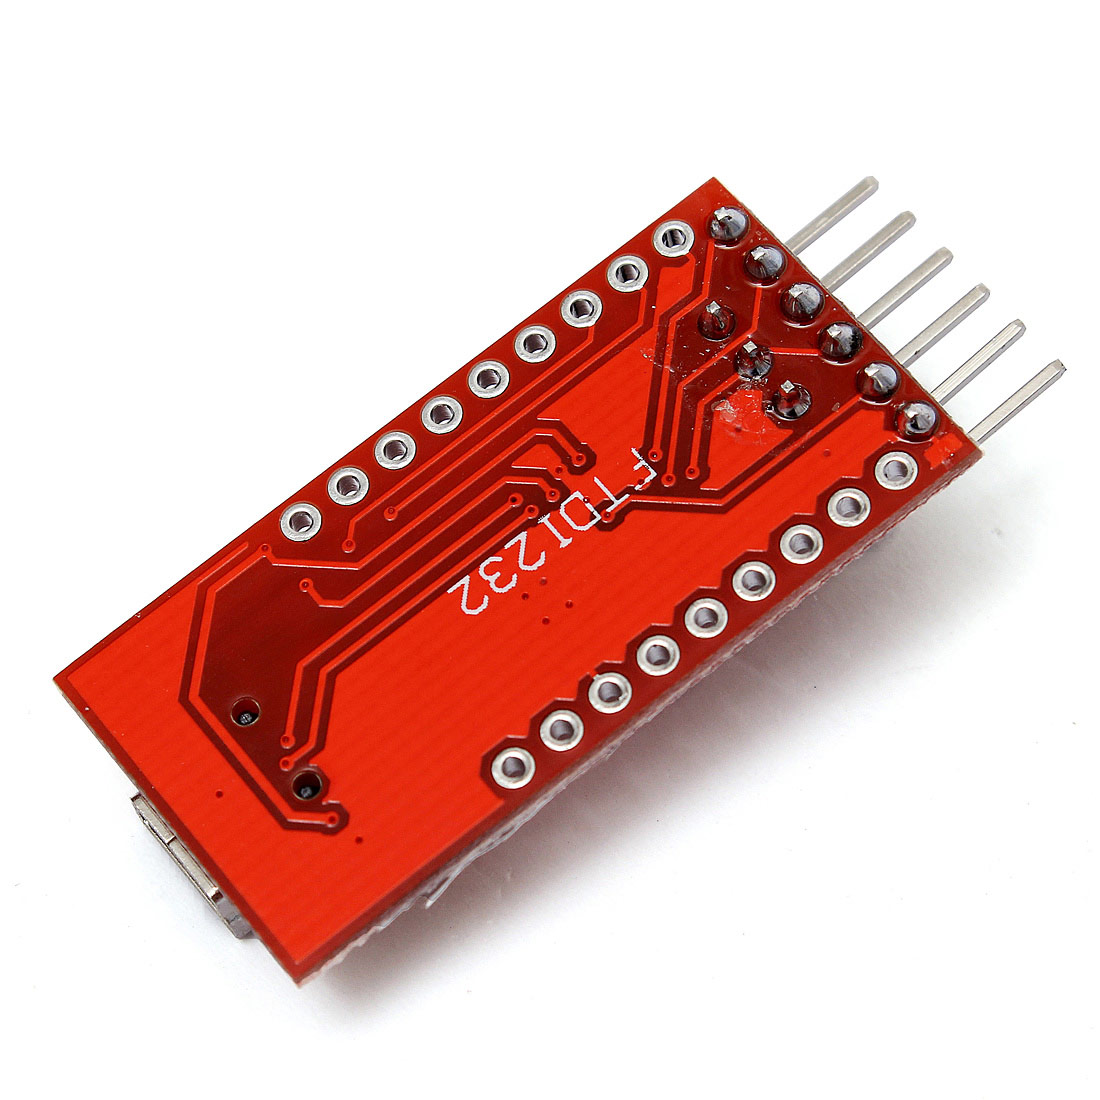 Geekcreitreg-FT232RL-FTDI-USB-To-TTL-Serial-Converter-Adapter-Module-Geekcreit-for-Arduino---product-917226-2